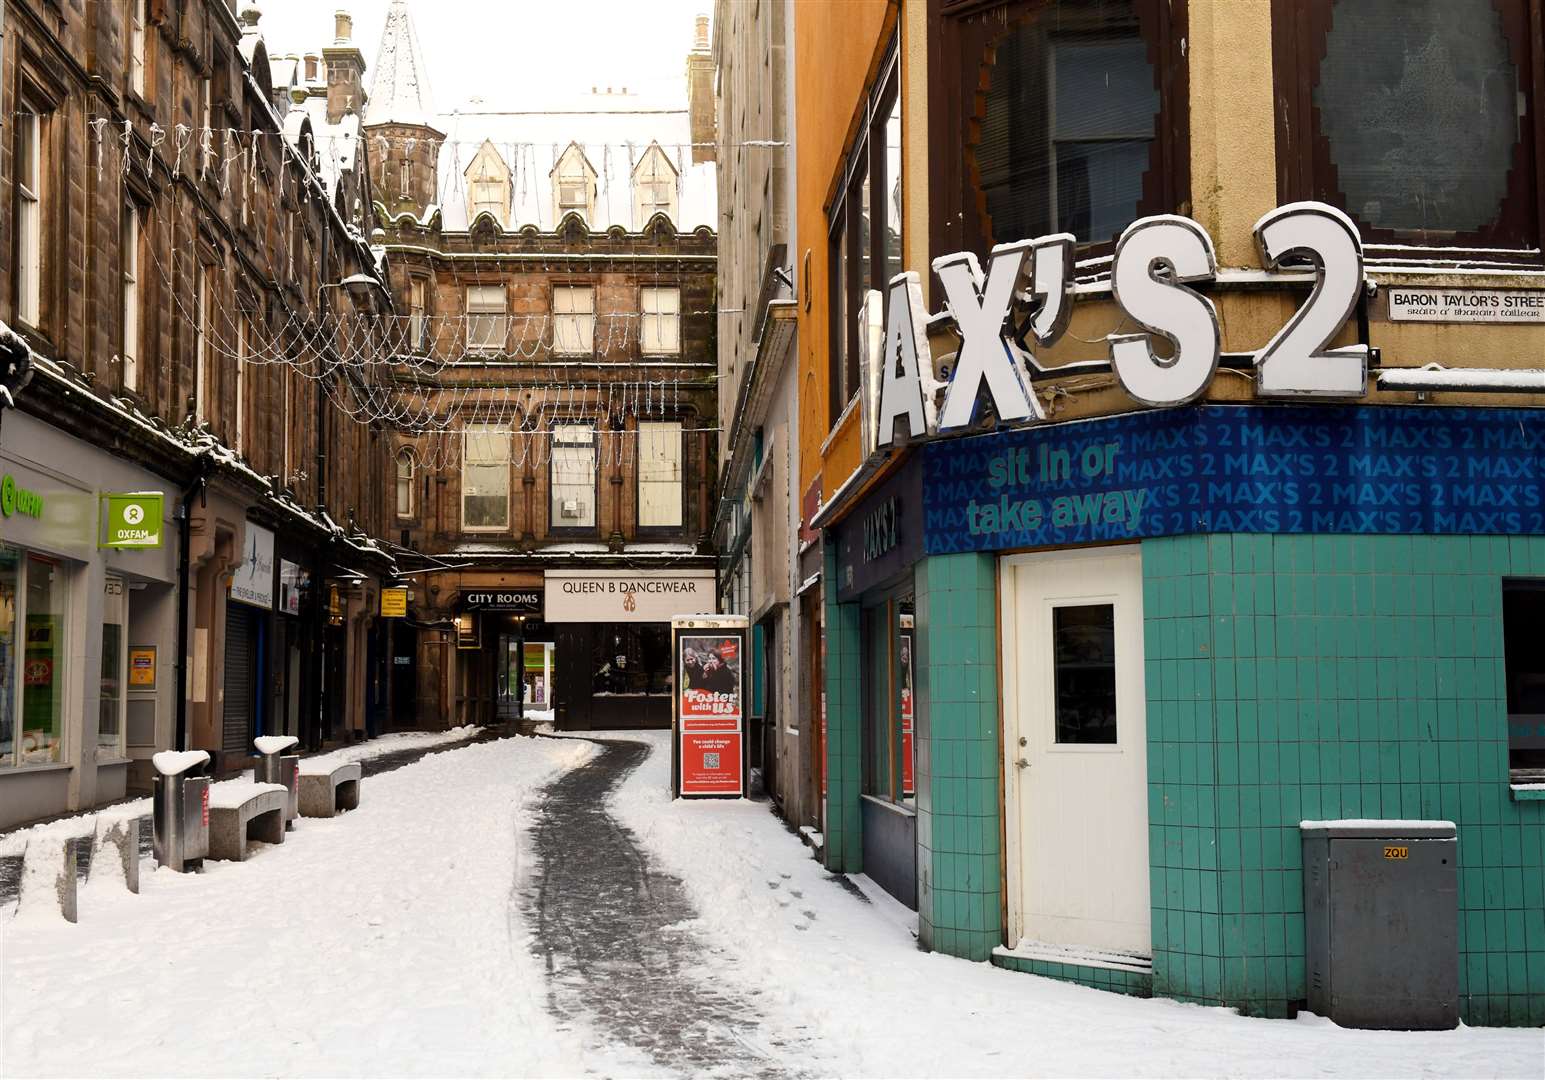 Drummond Street in the snow.